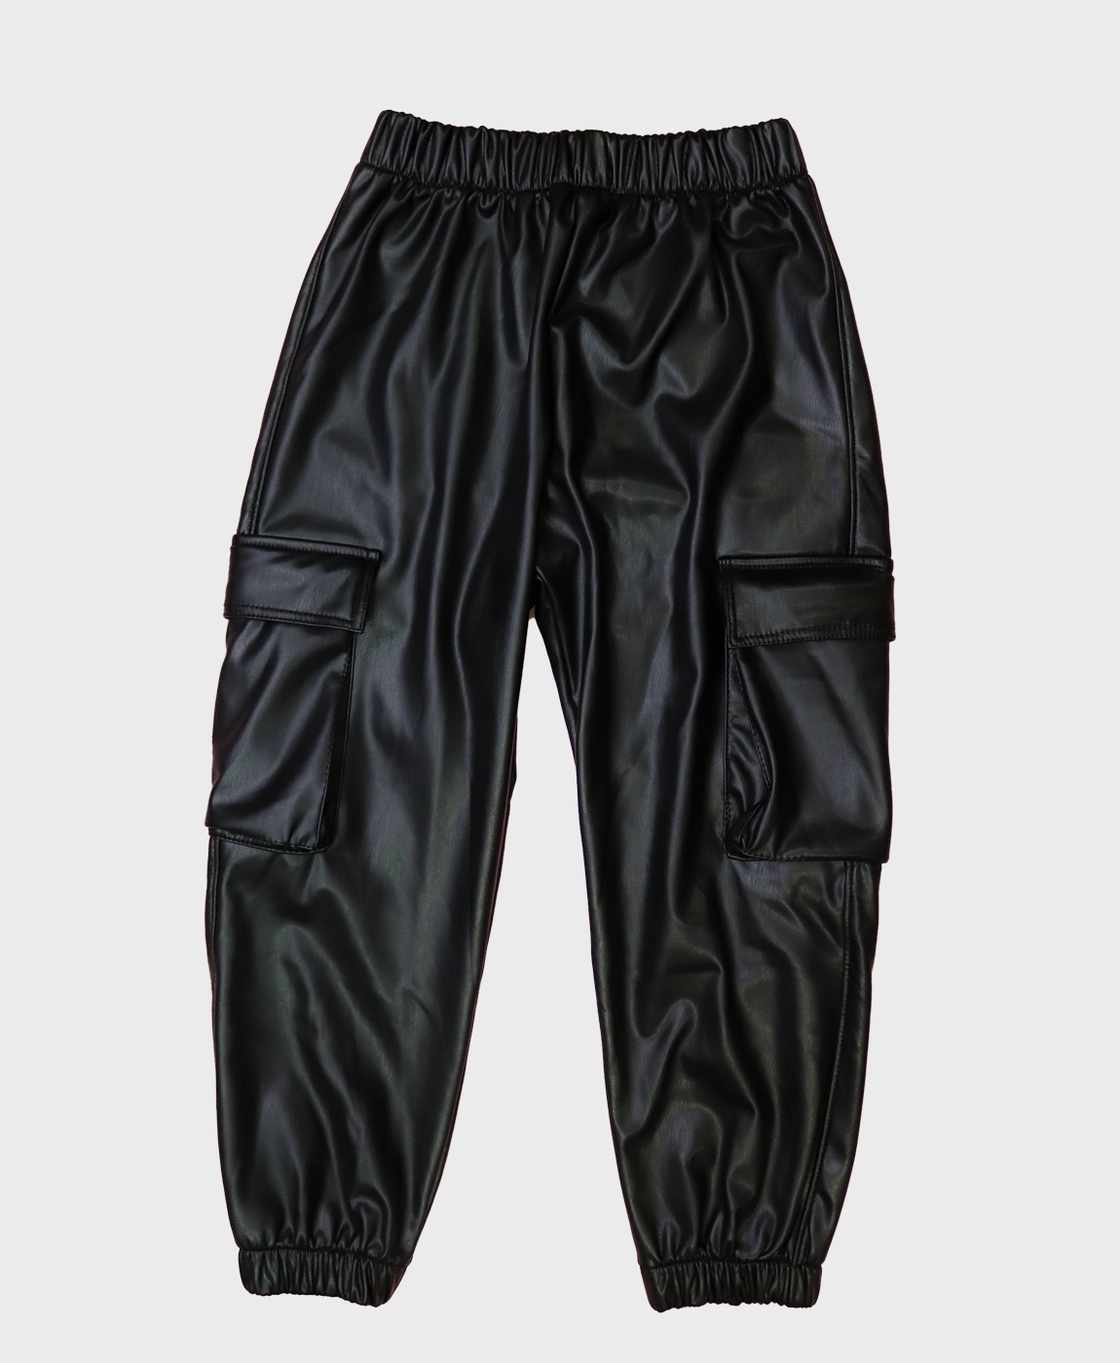 Black leather cargo sweatpants